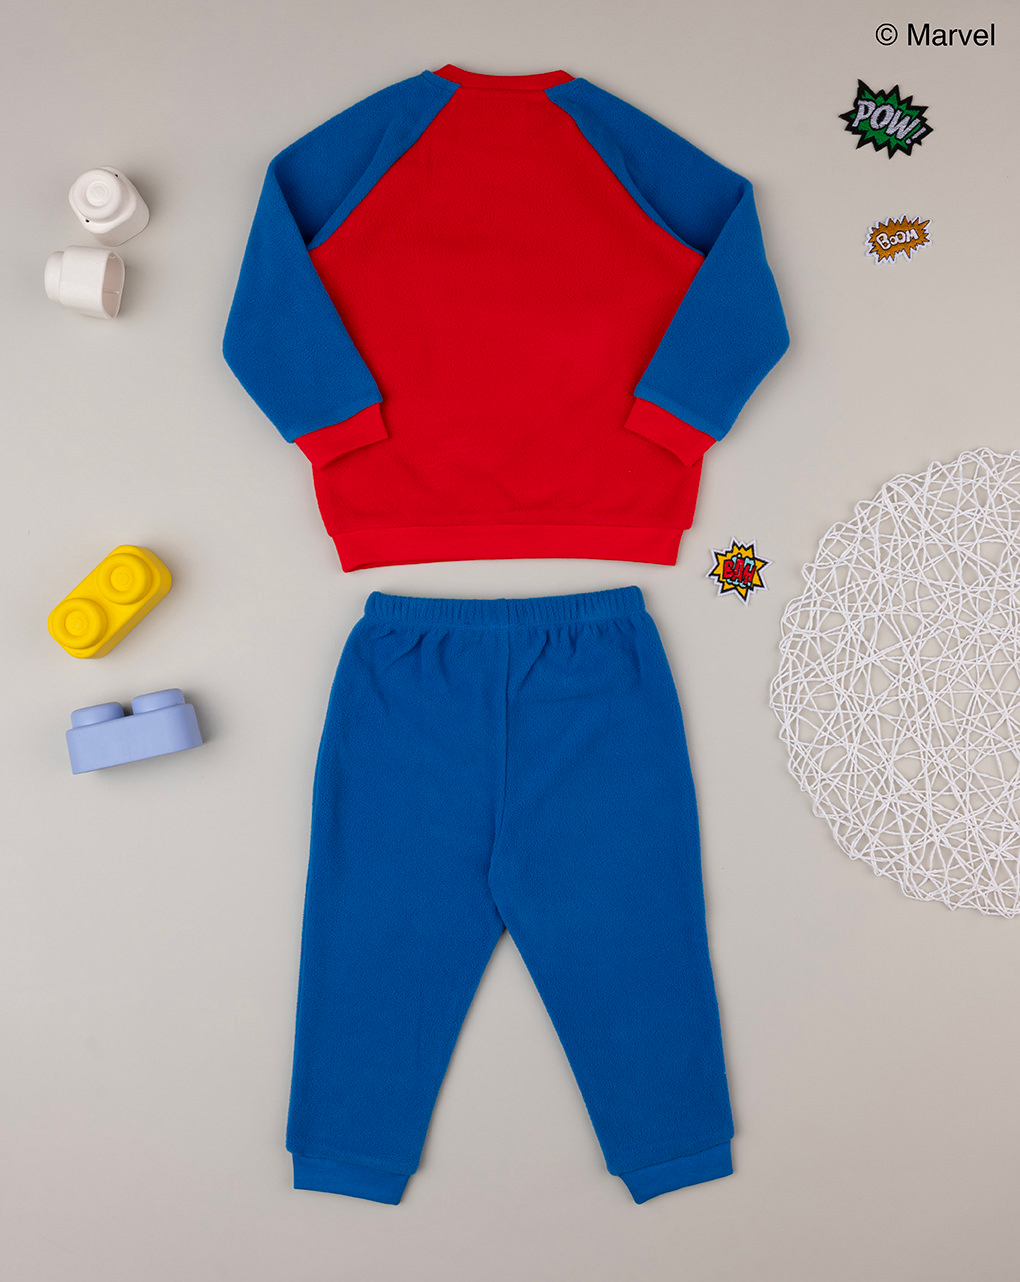 pijama para bebé algodón orgánico de dos piezas